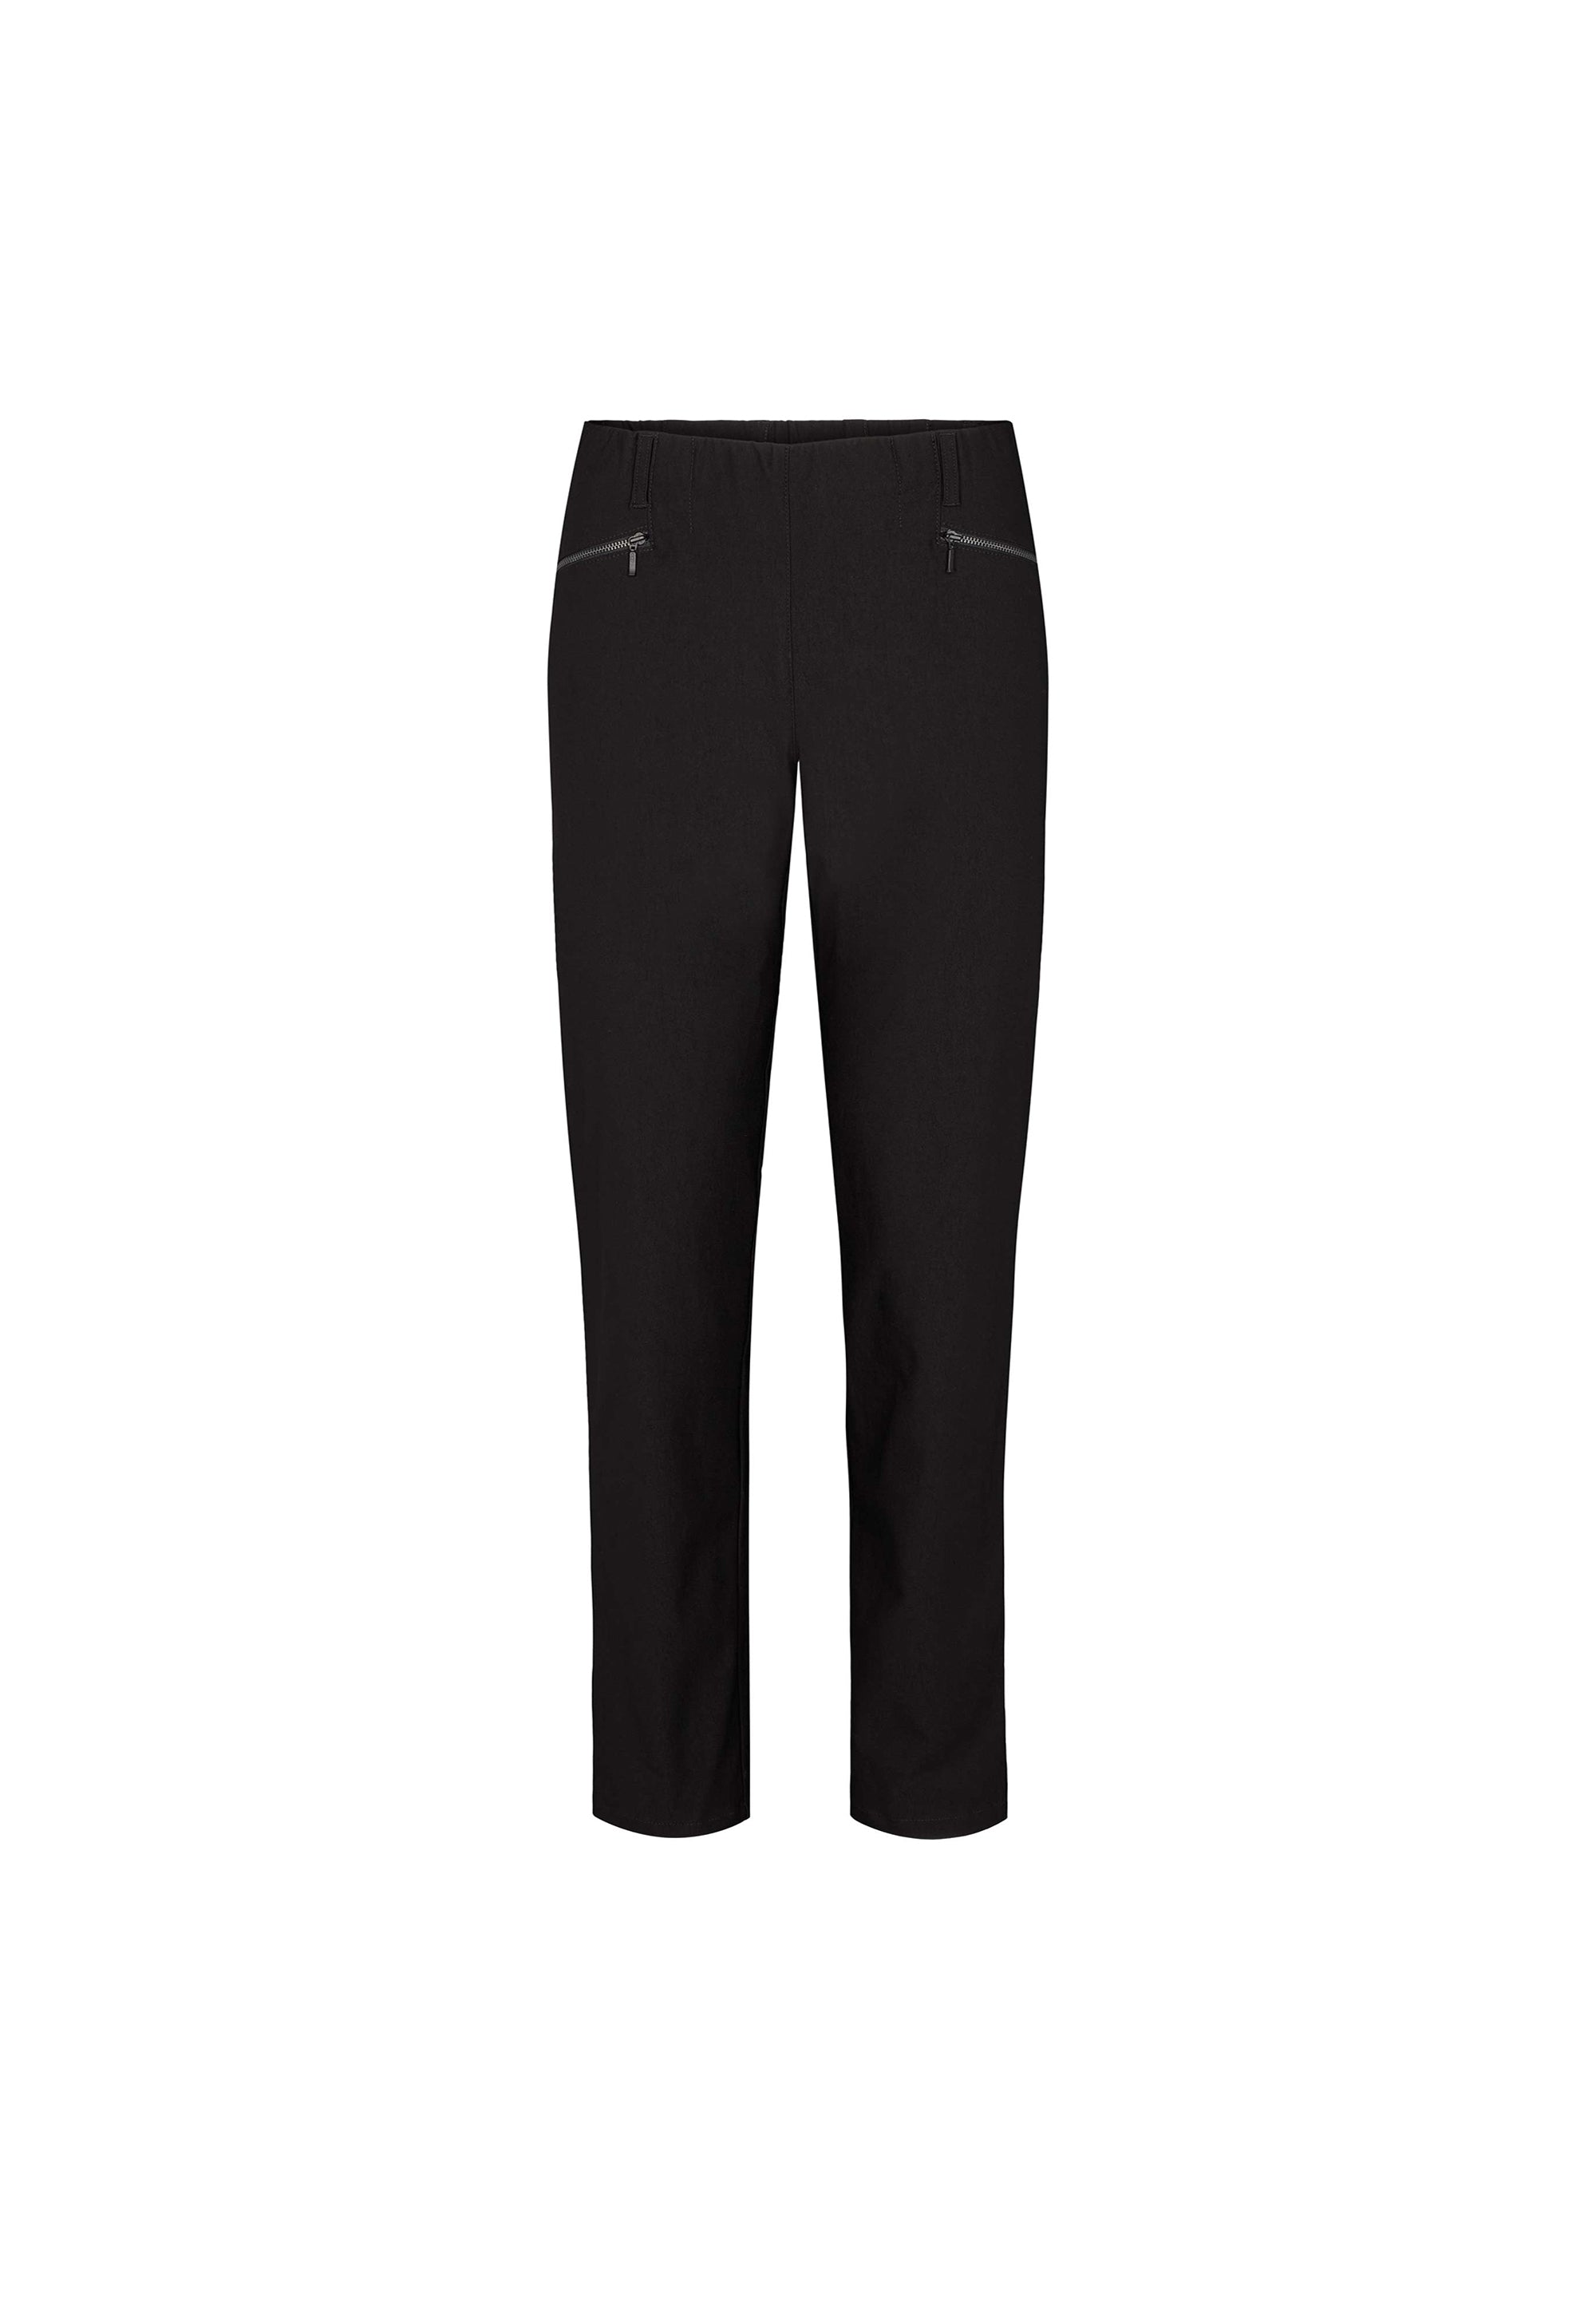 LAURIE Rylie Pocket Regular - Medium Length Trousers REGULAR 99970 Black